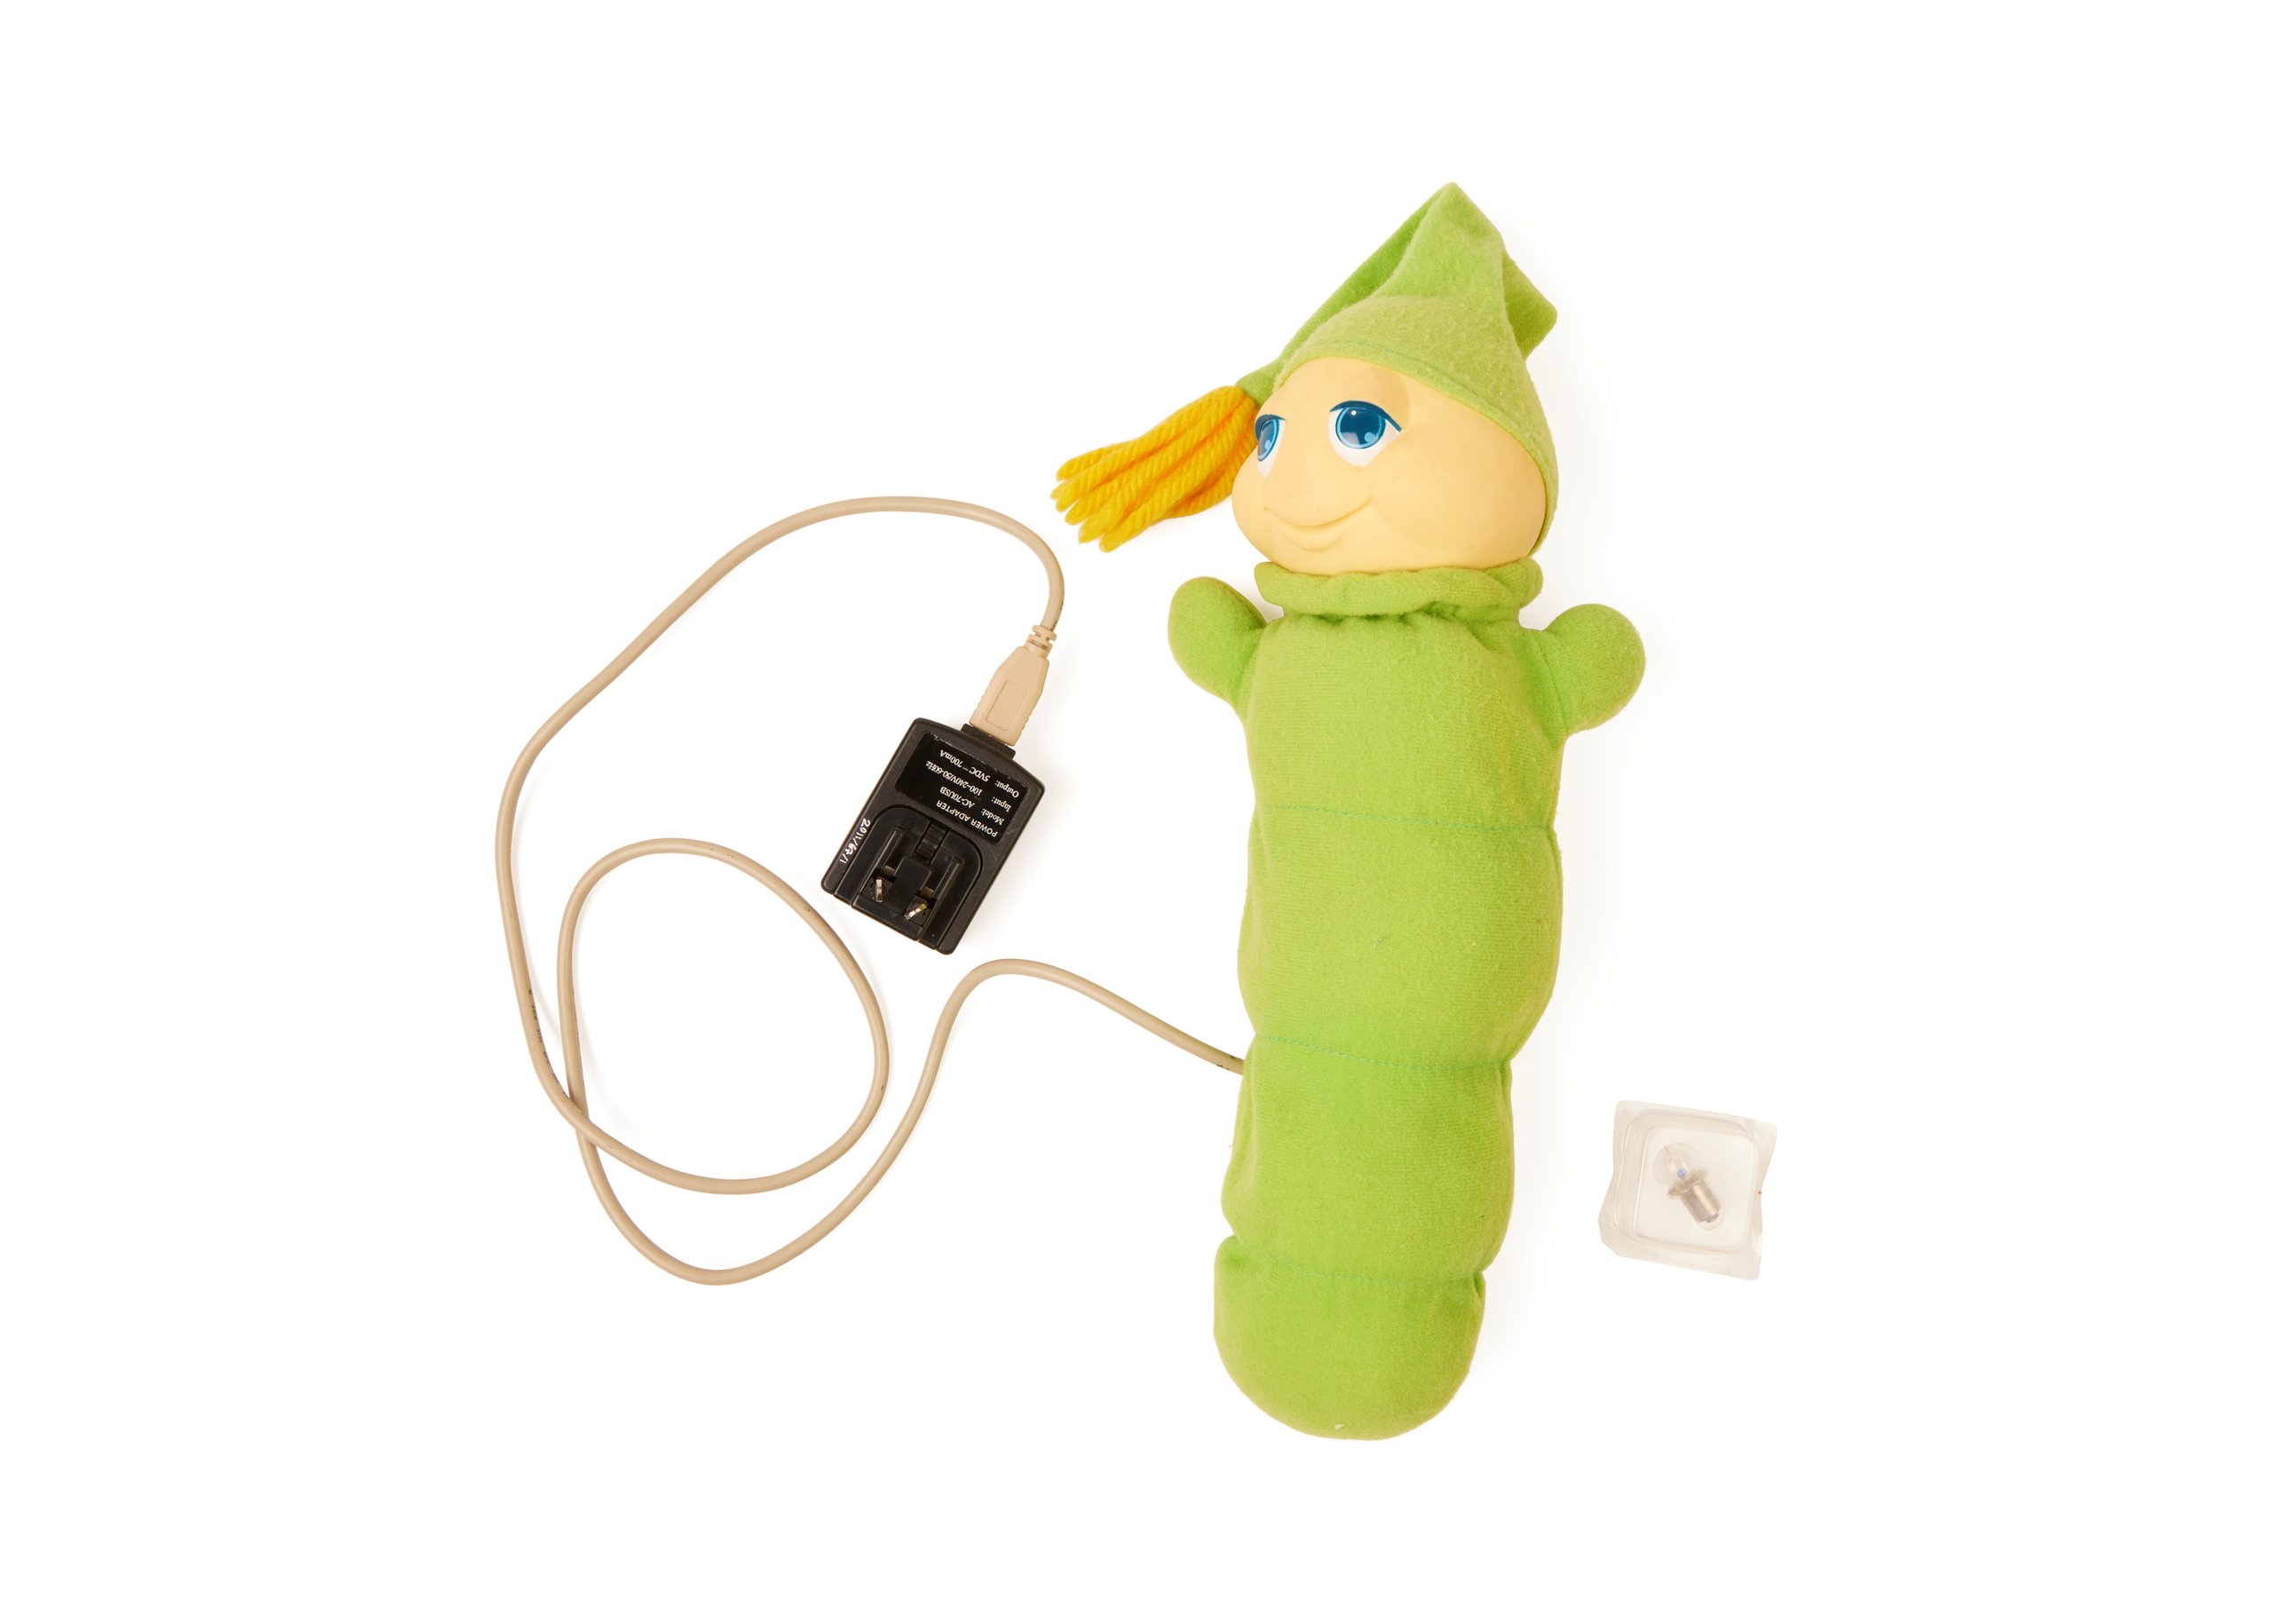 'Glo Worm' soft toy by Hasbro Inc